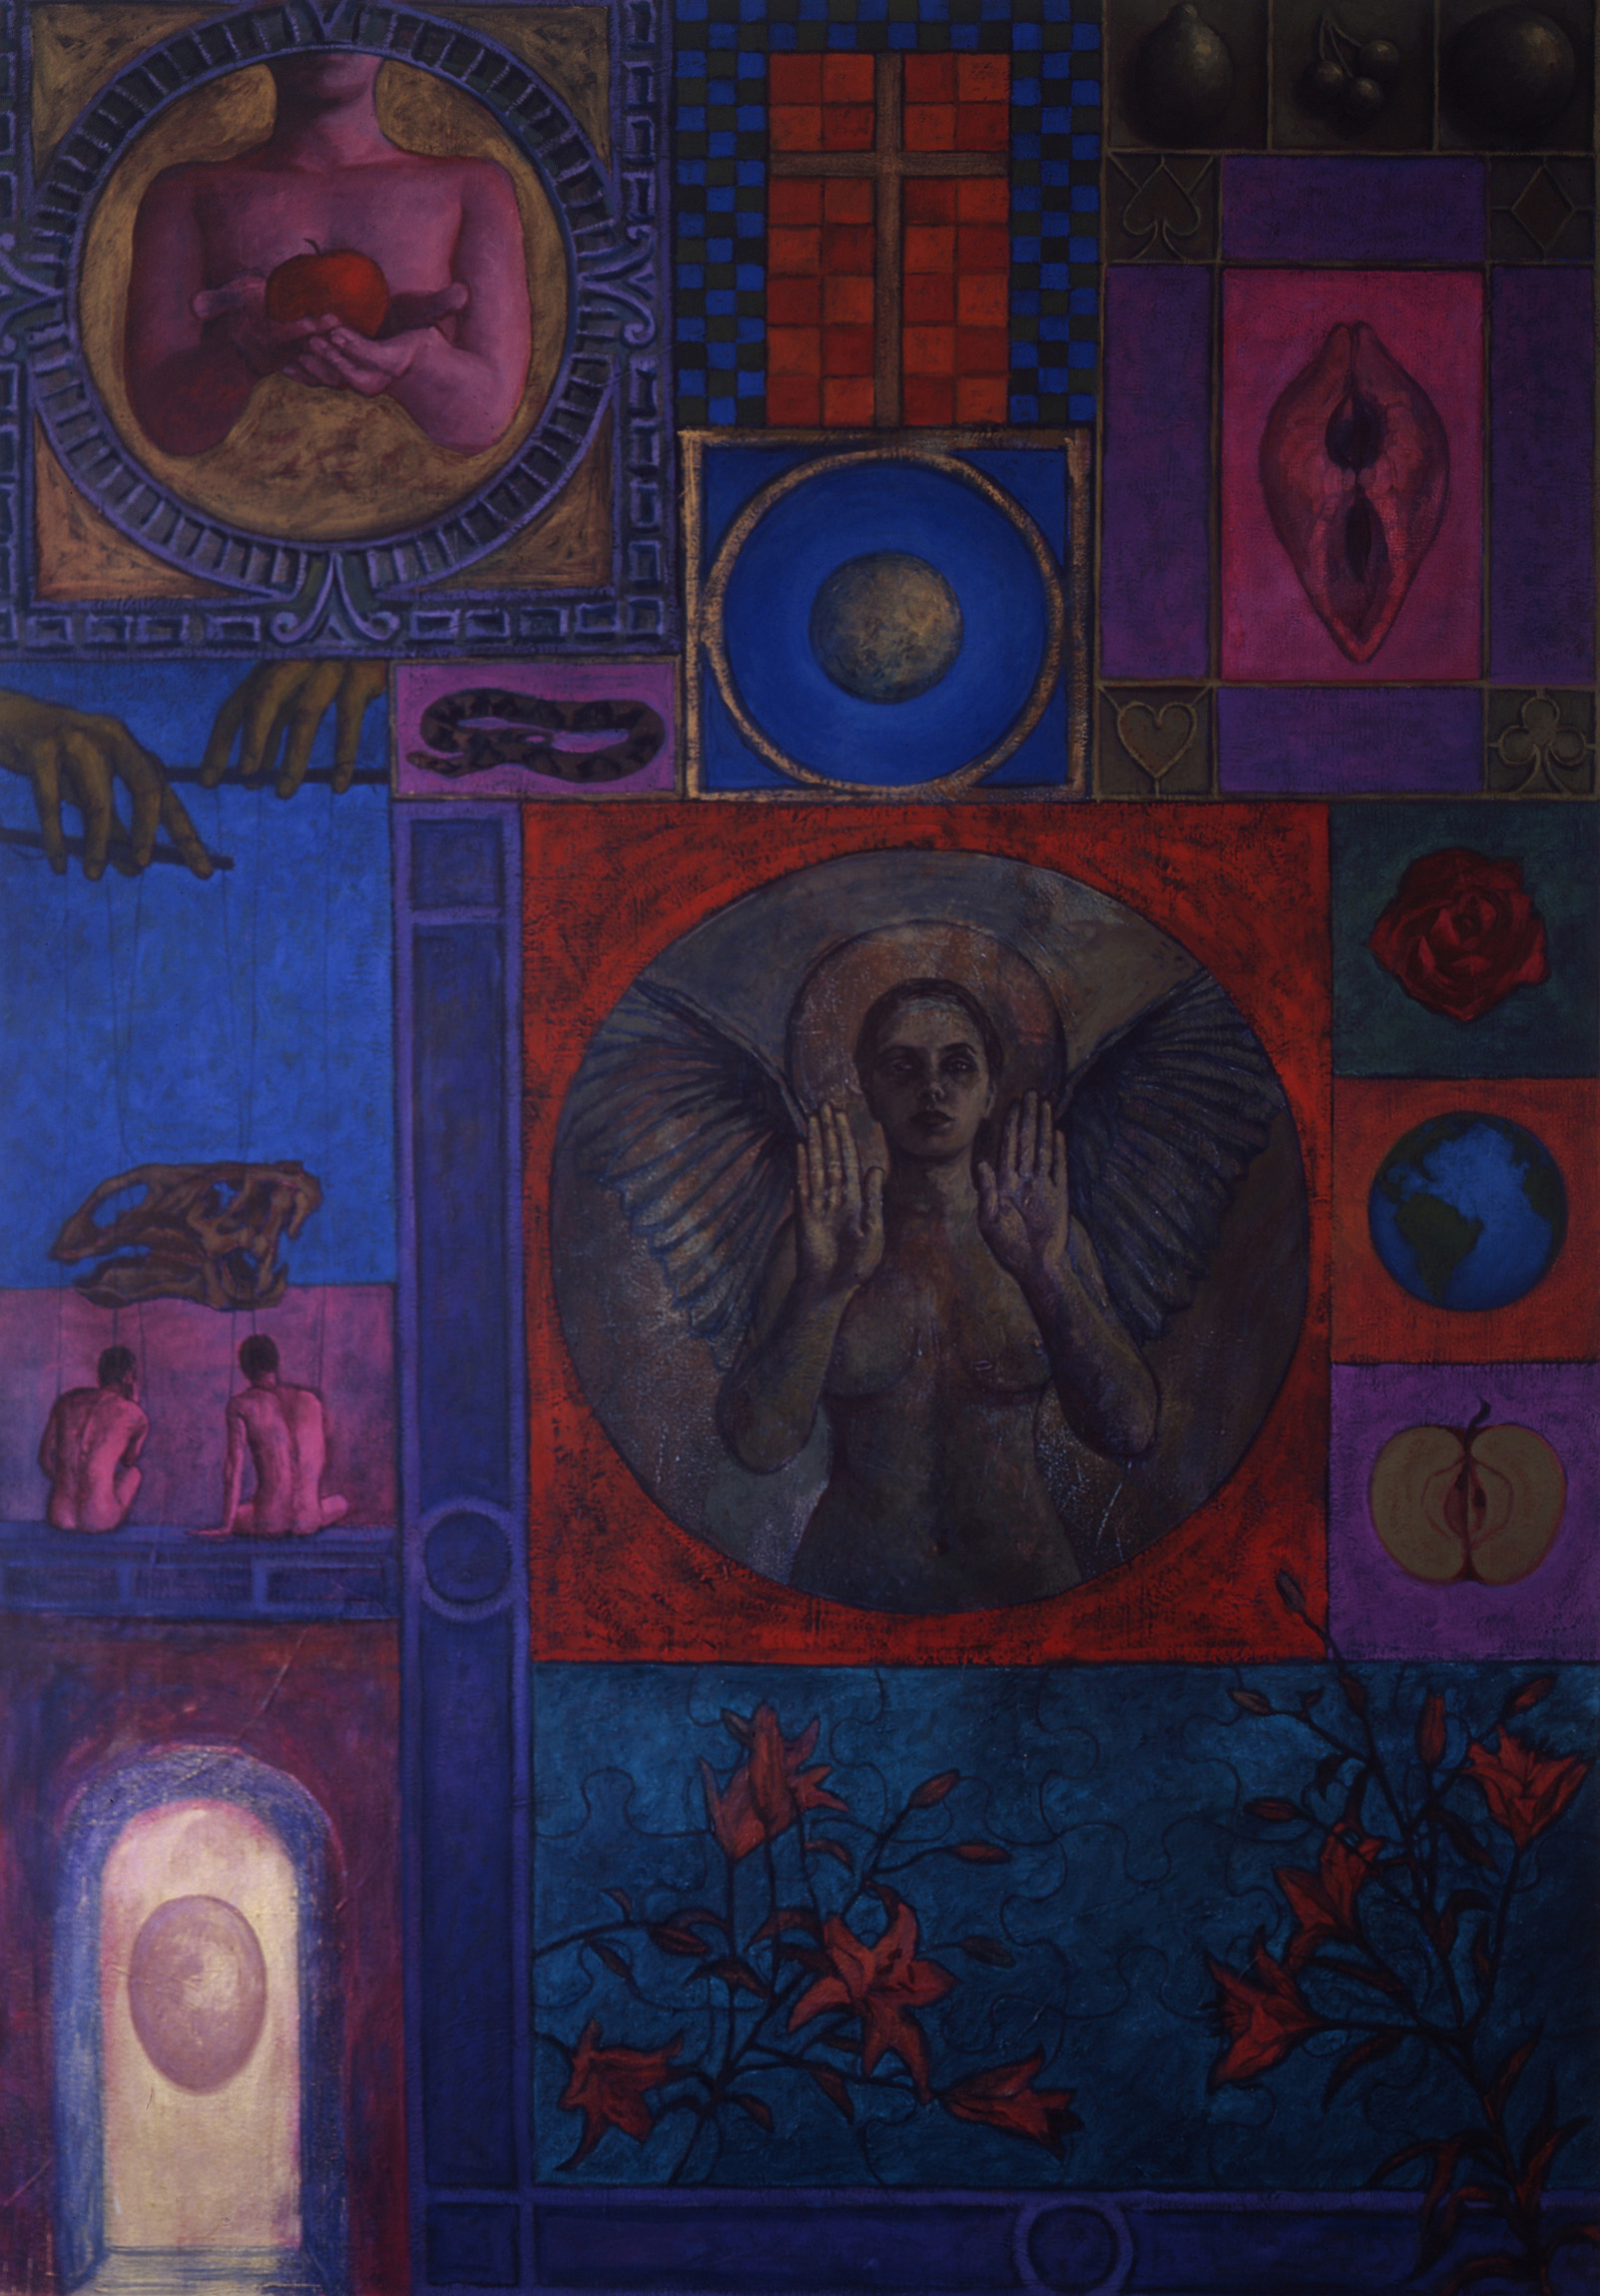 symbols of the goddess, egg, shell, world, apple, rose, snake, nurture, lilies, an angel indicating 'stop the madness', illuminated manuscript inspiration